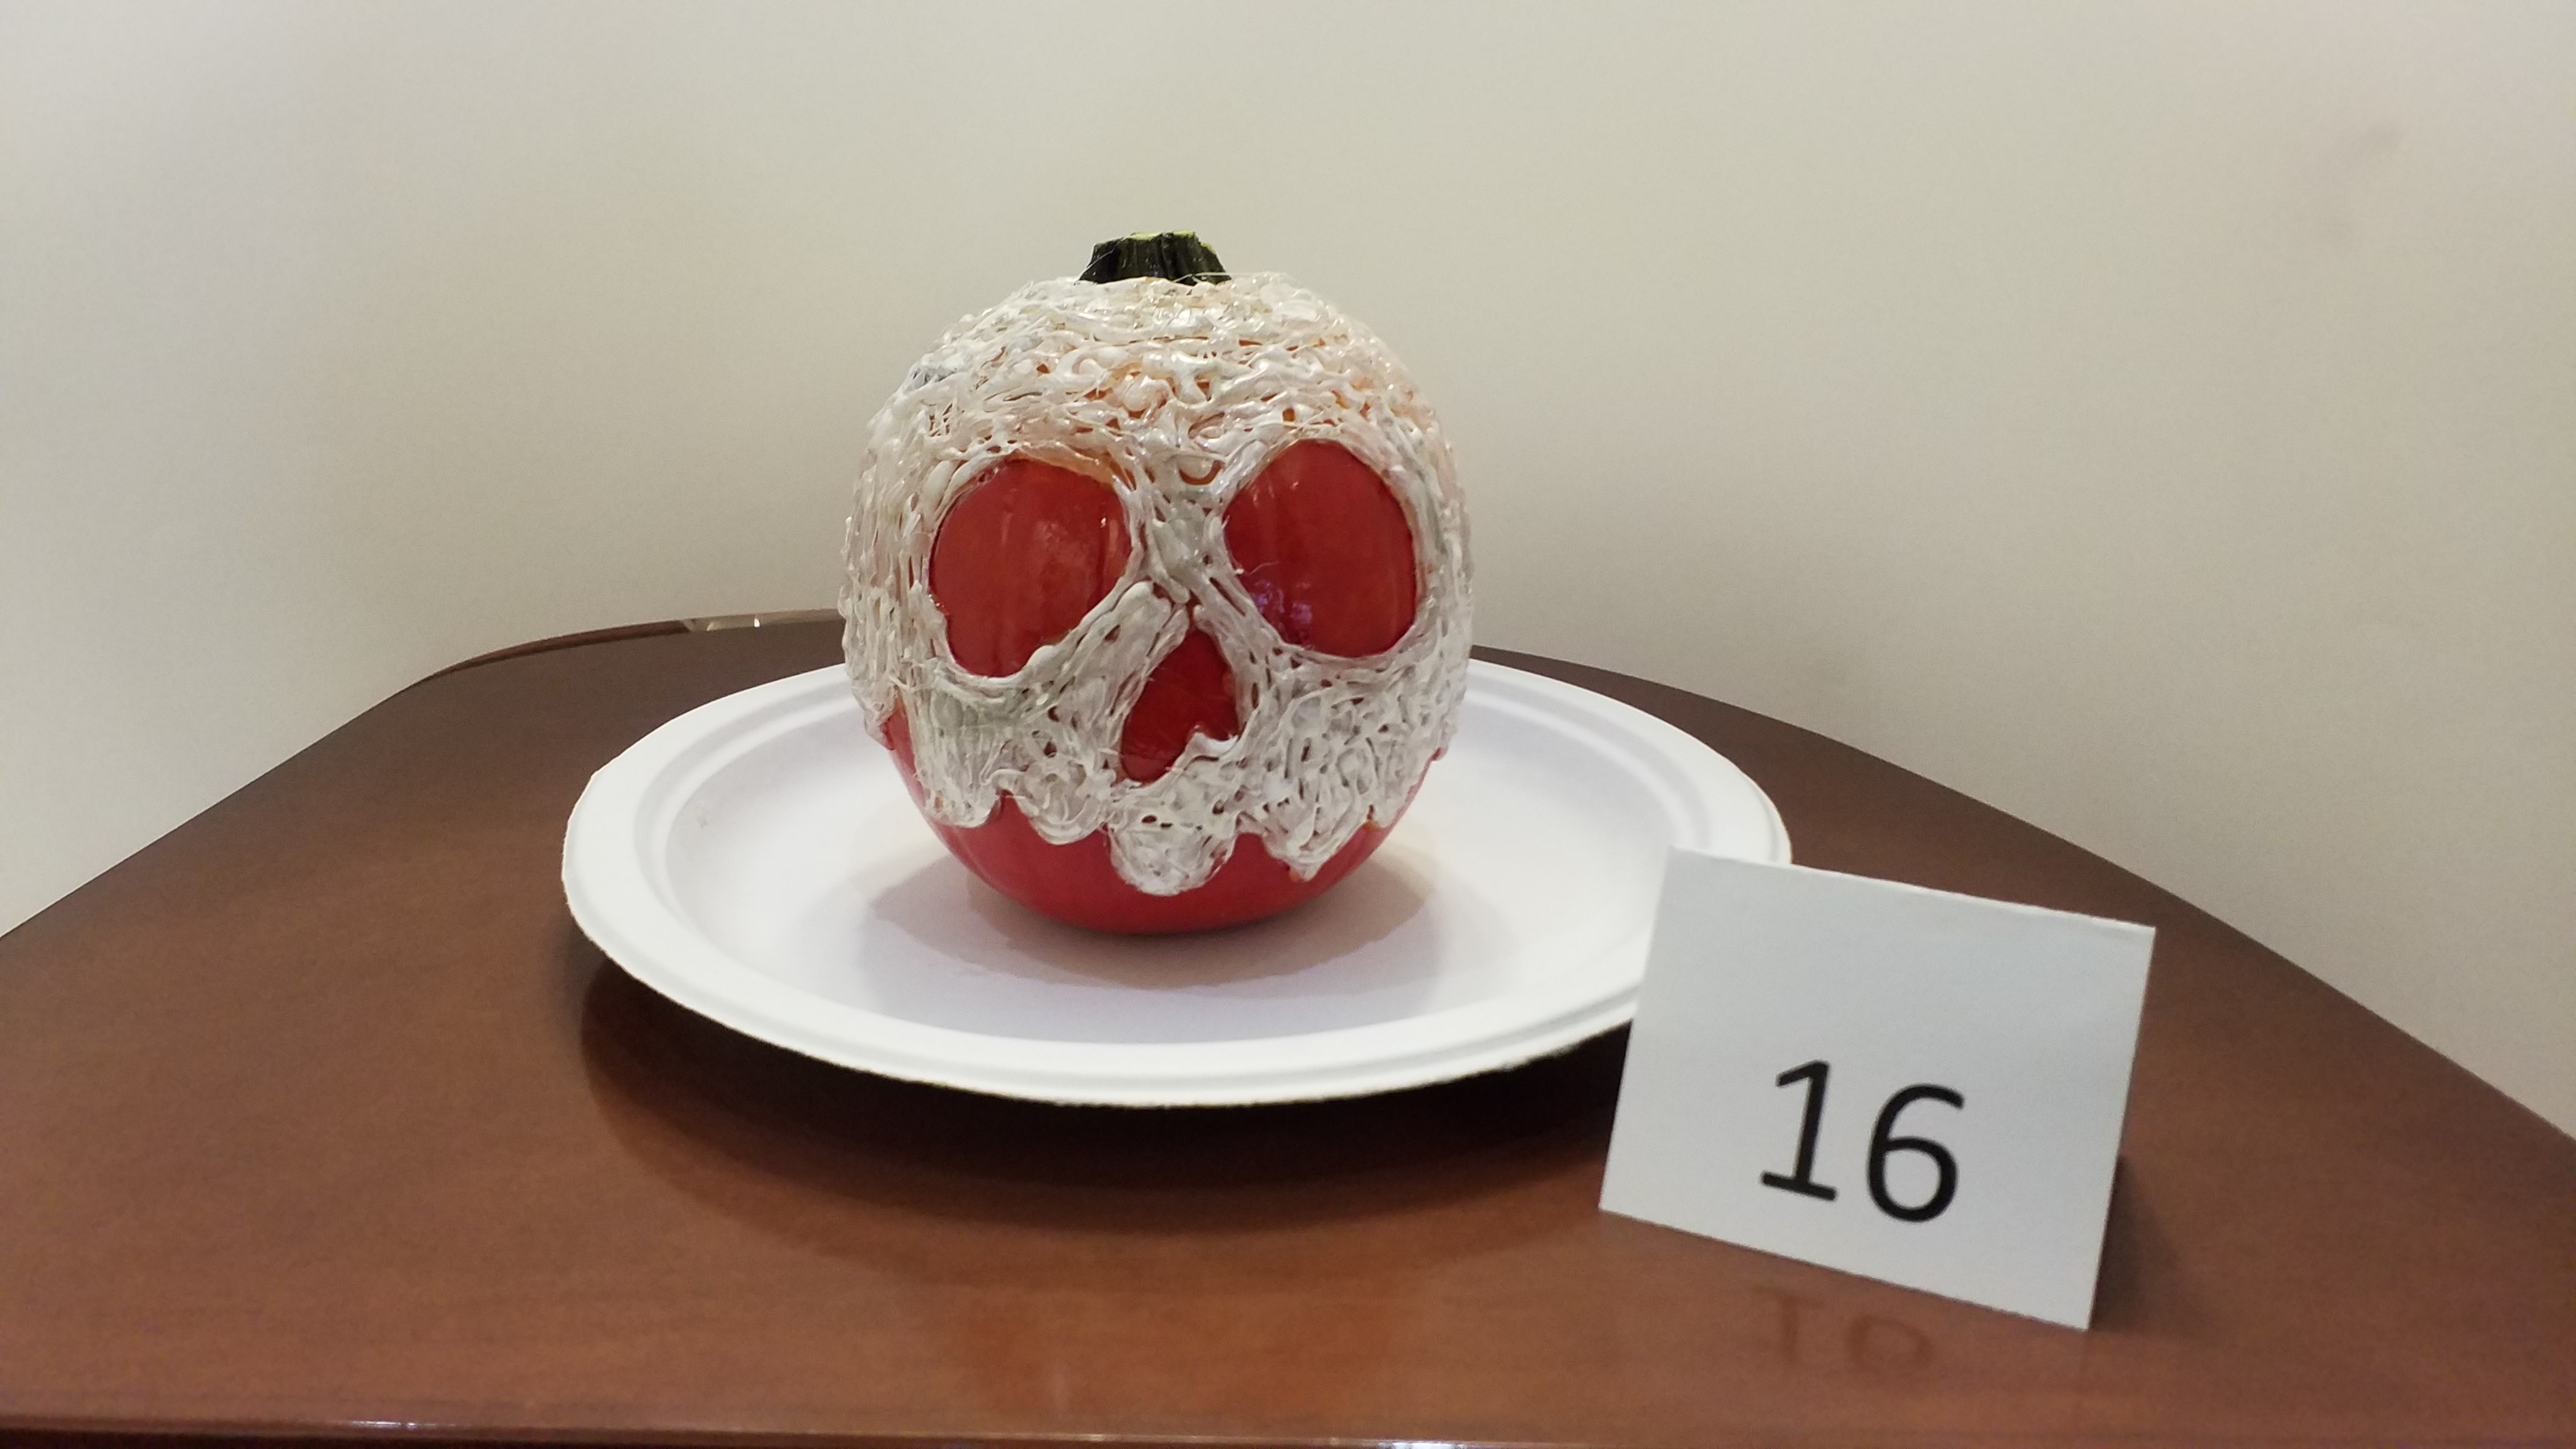 Pumpkin decorated as skull